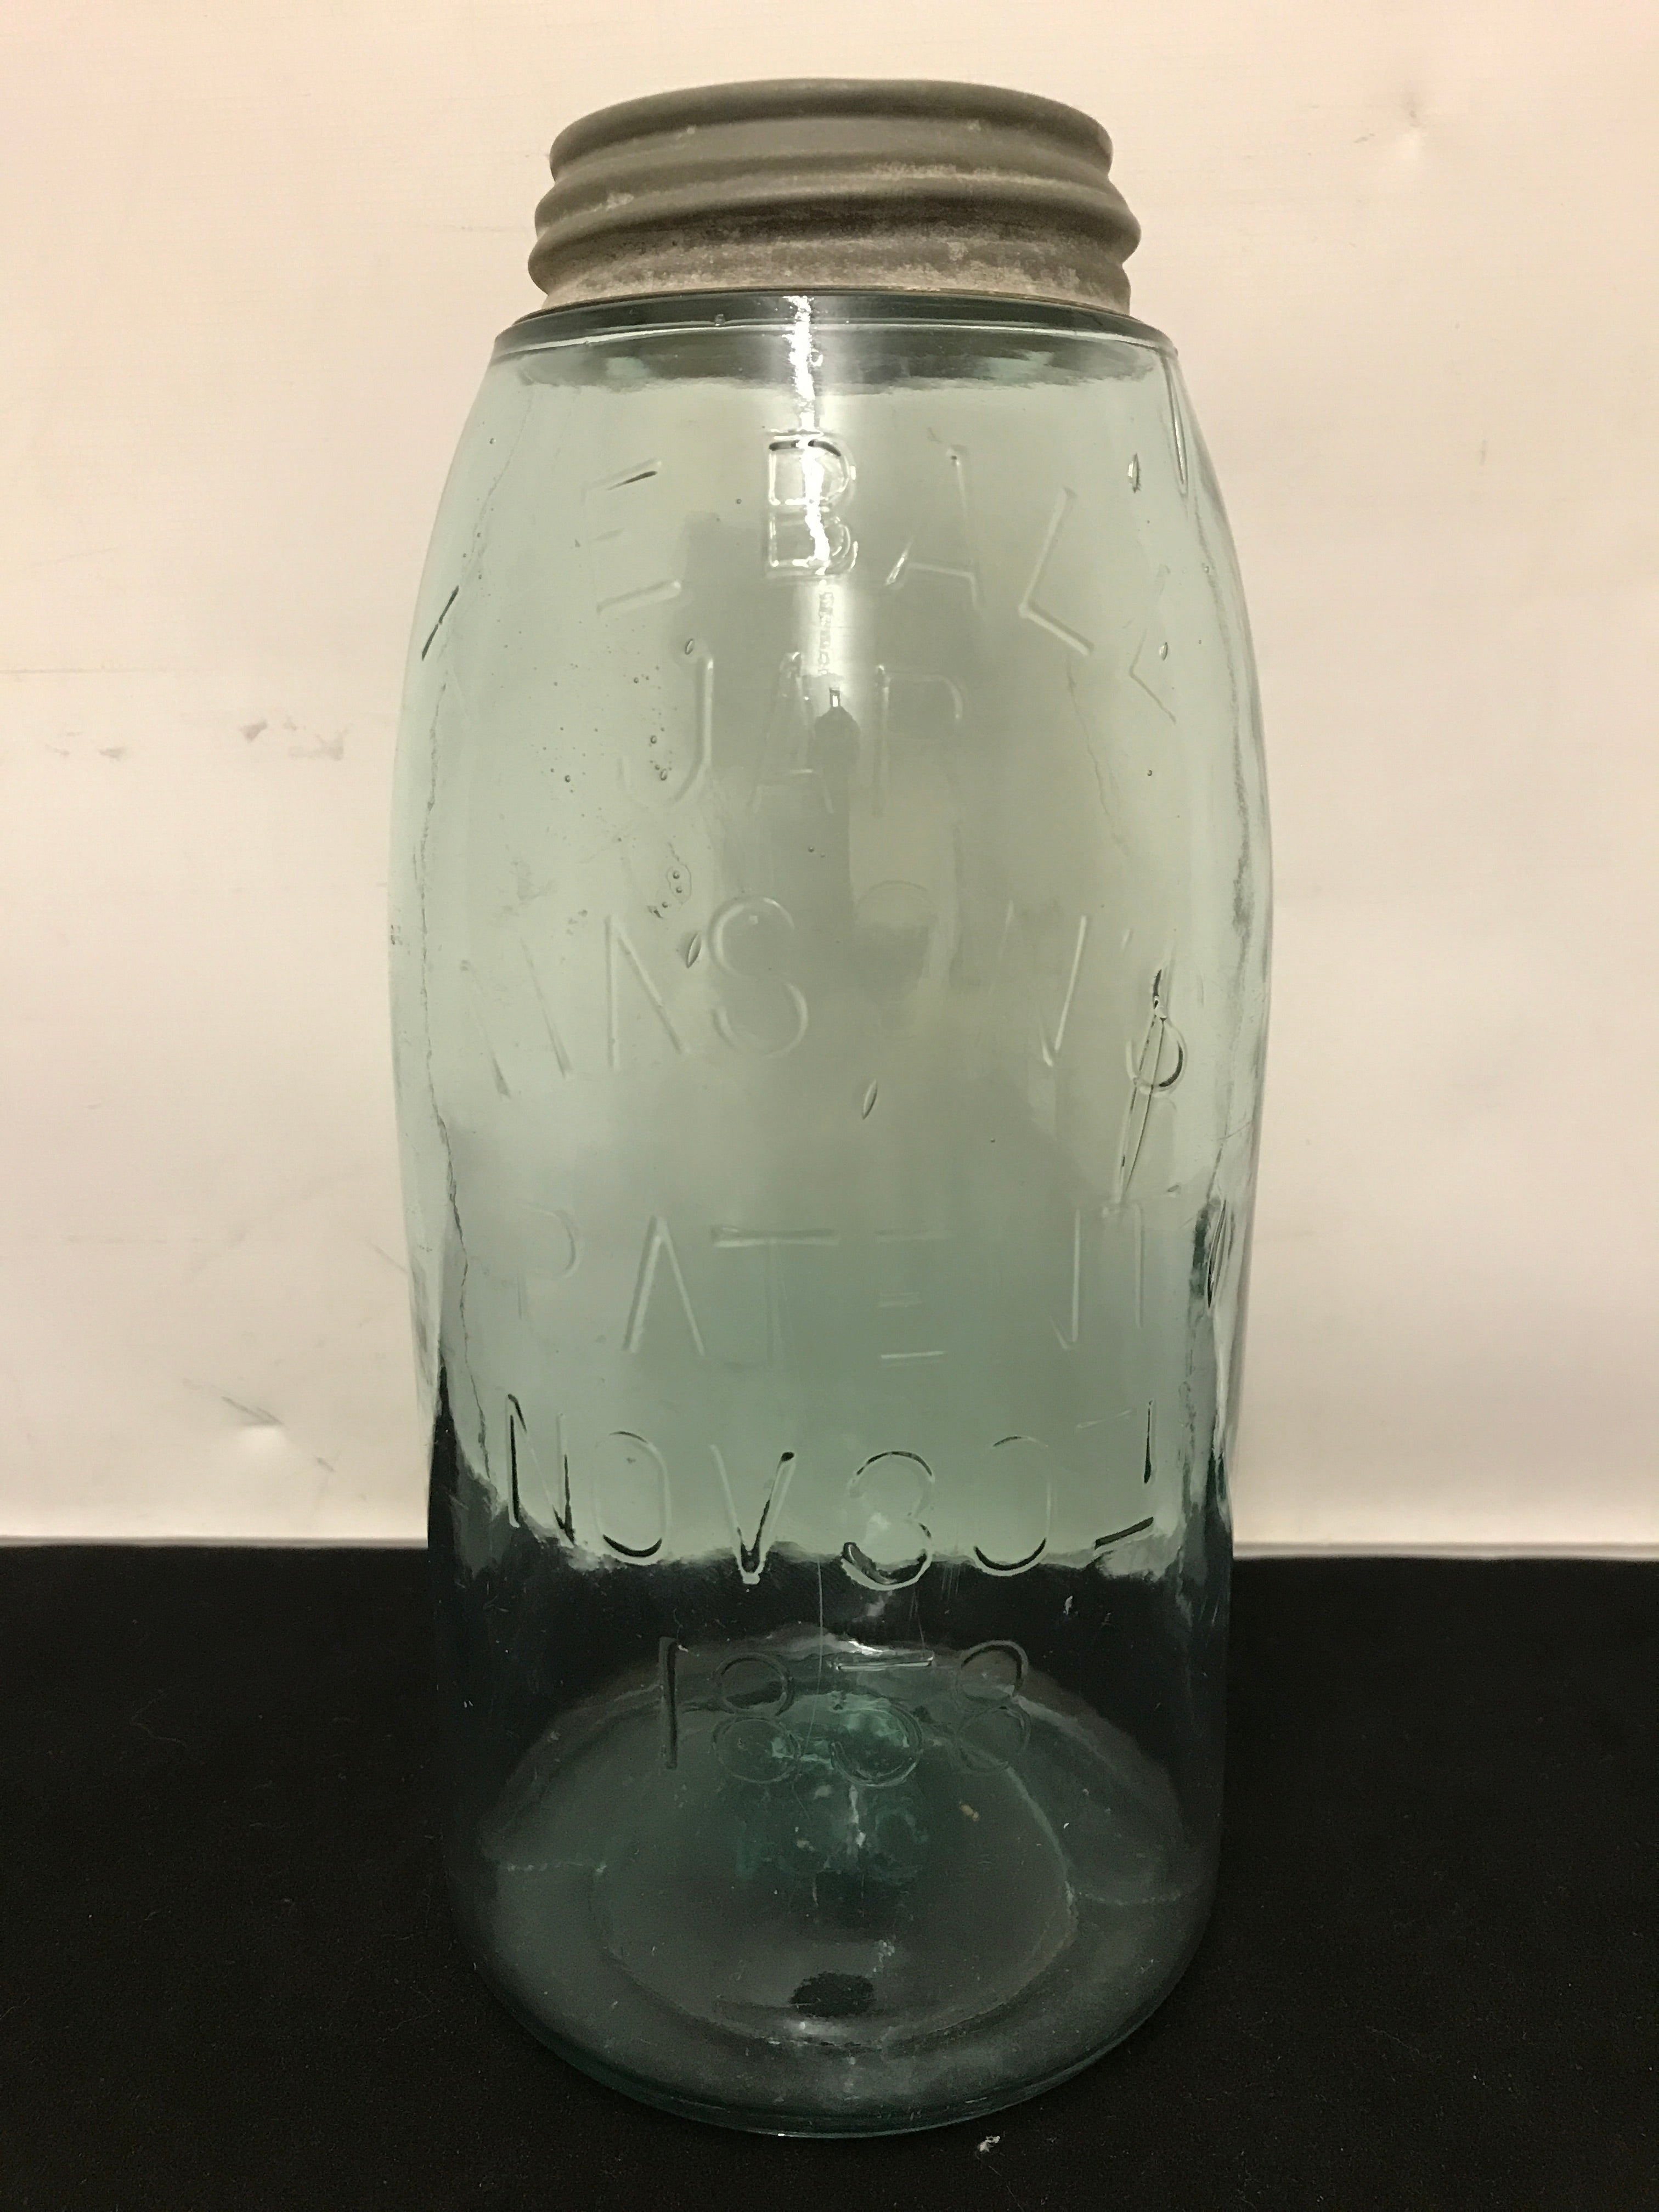 Antique 1890s The Ball Jar Mason's Patent Nov 30th 1858 with Zinc Cap ERROR